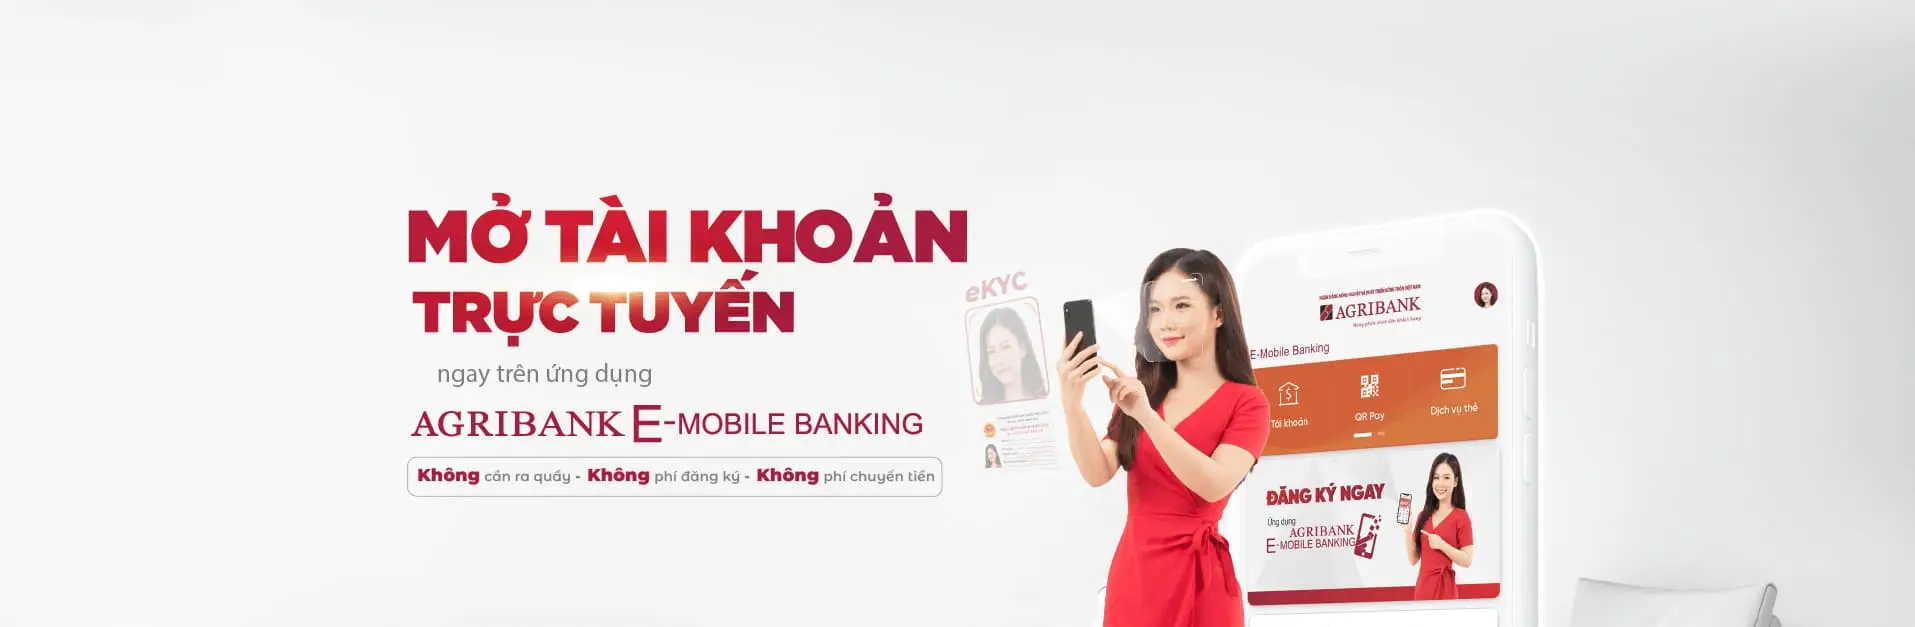 Giới thiệu về ứng dụng Agribank E-Mobile Banking